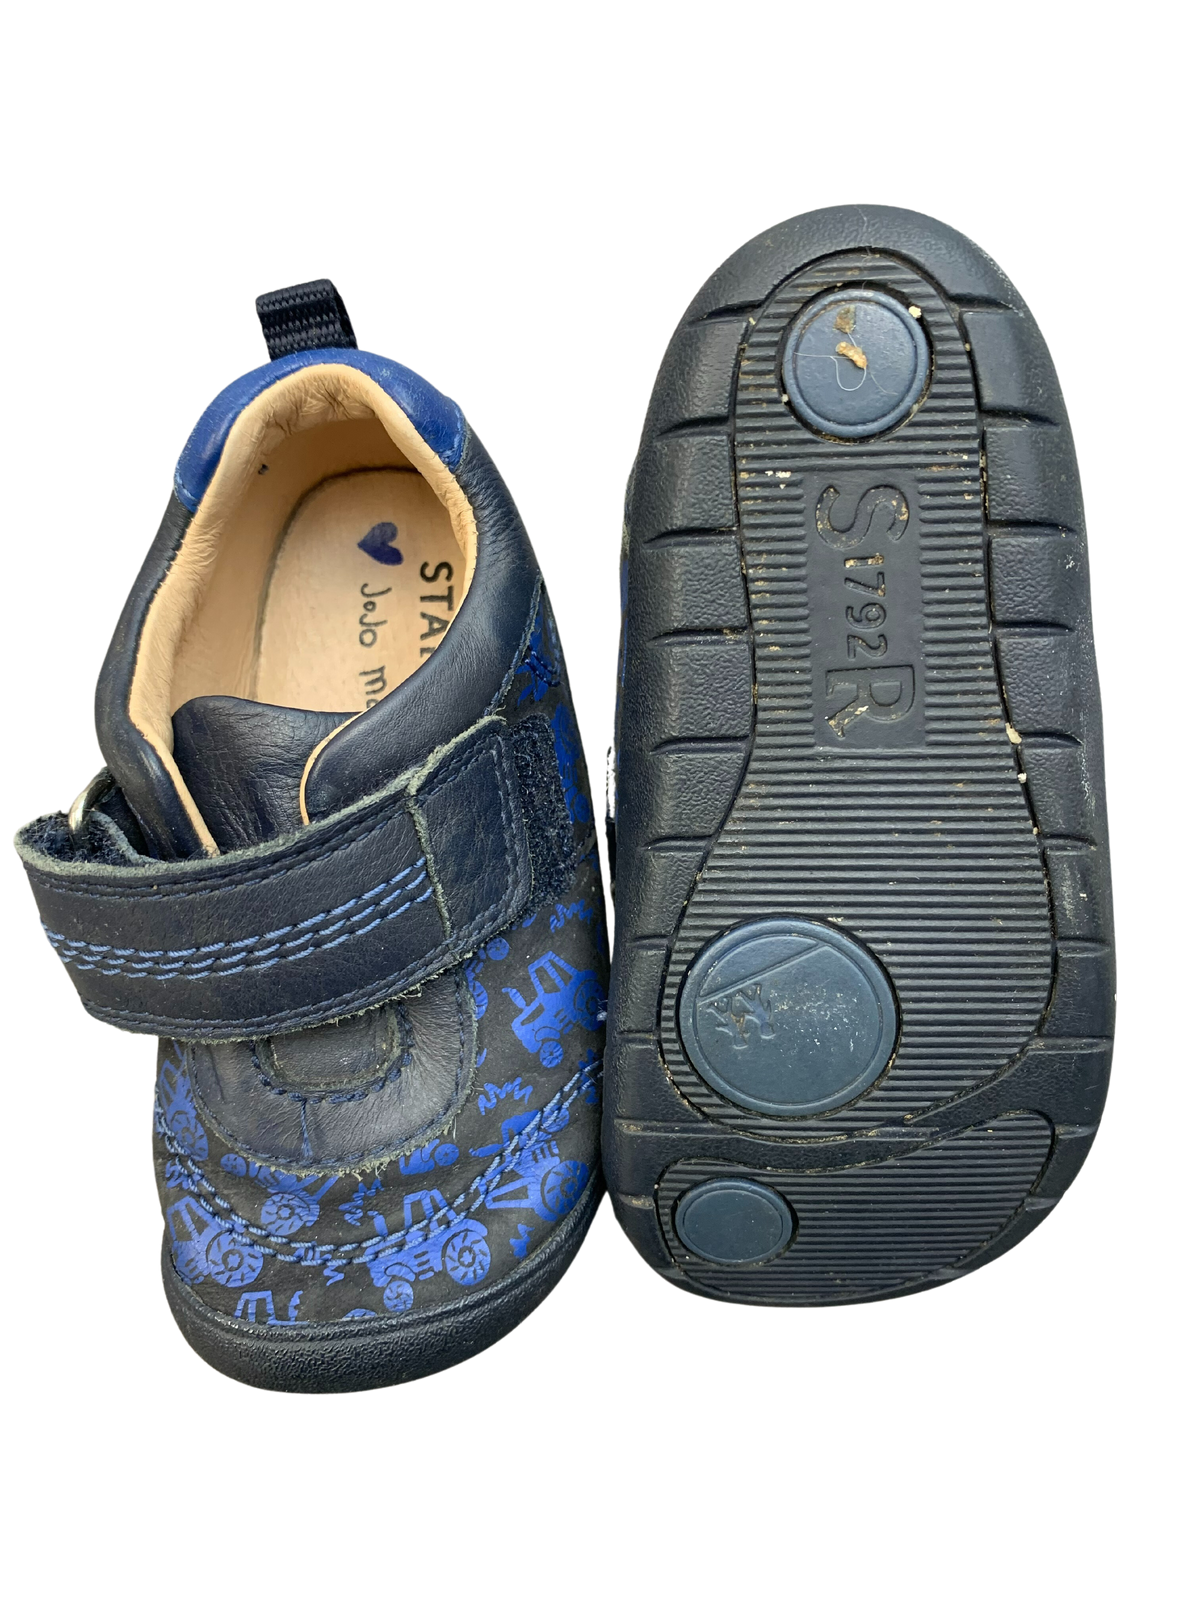 Jojo Maman Babe Soft Rubber Velcro Shoes Infant Boy Size 5G